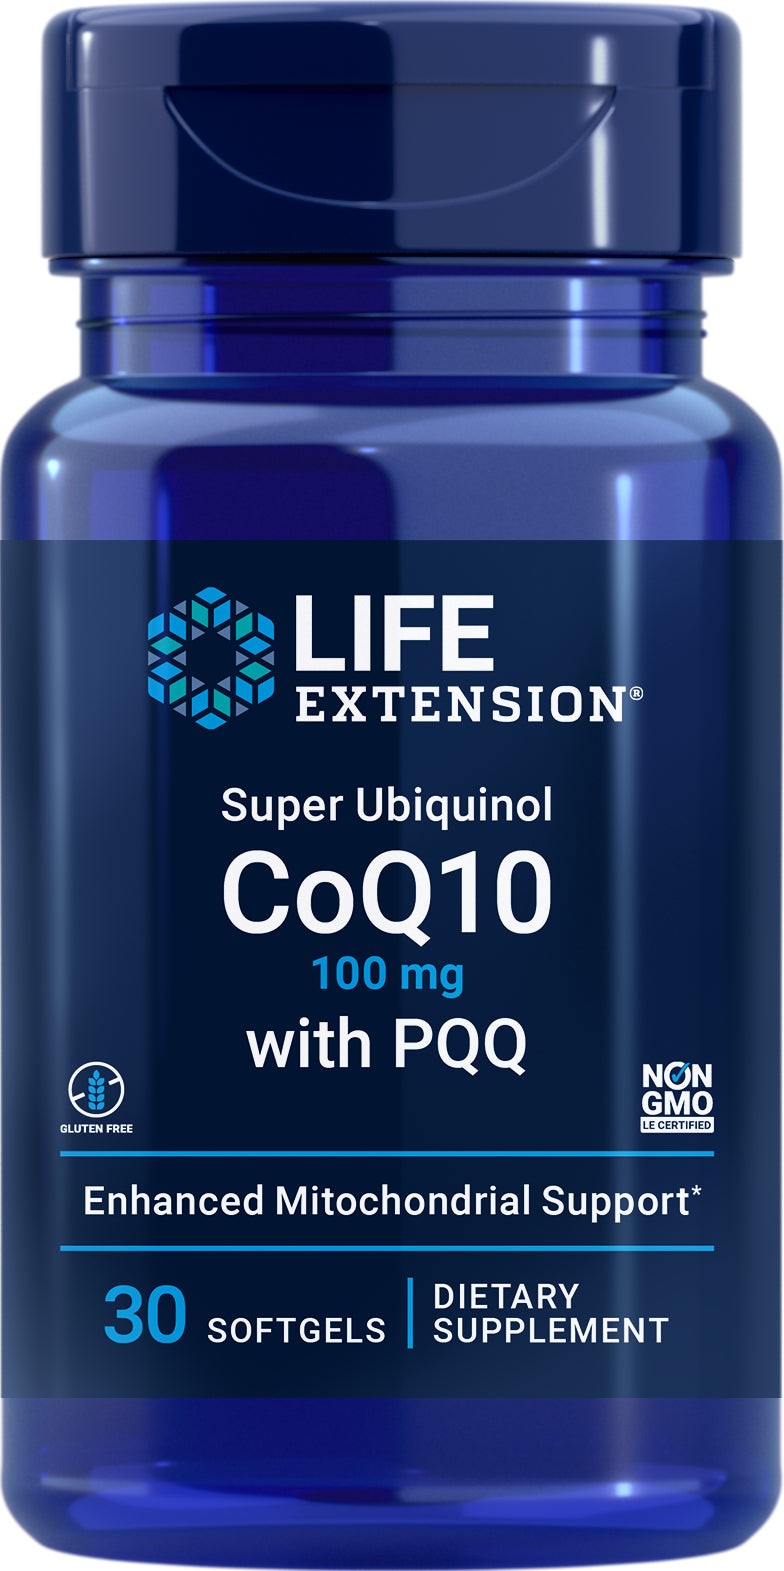 Super Ubiquinol CoQ10 with PQQ 100 mg, 30 softgels by Life Extension